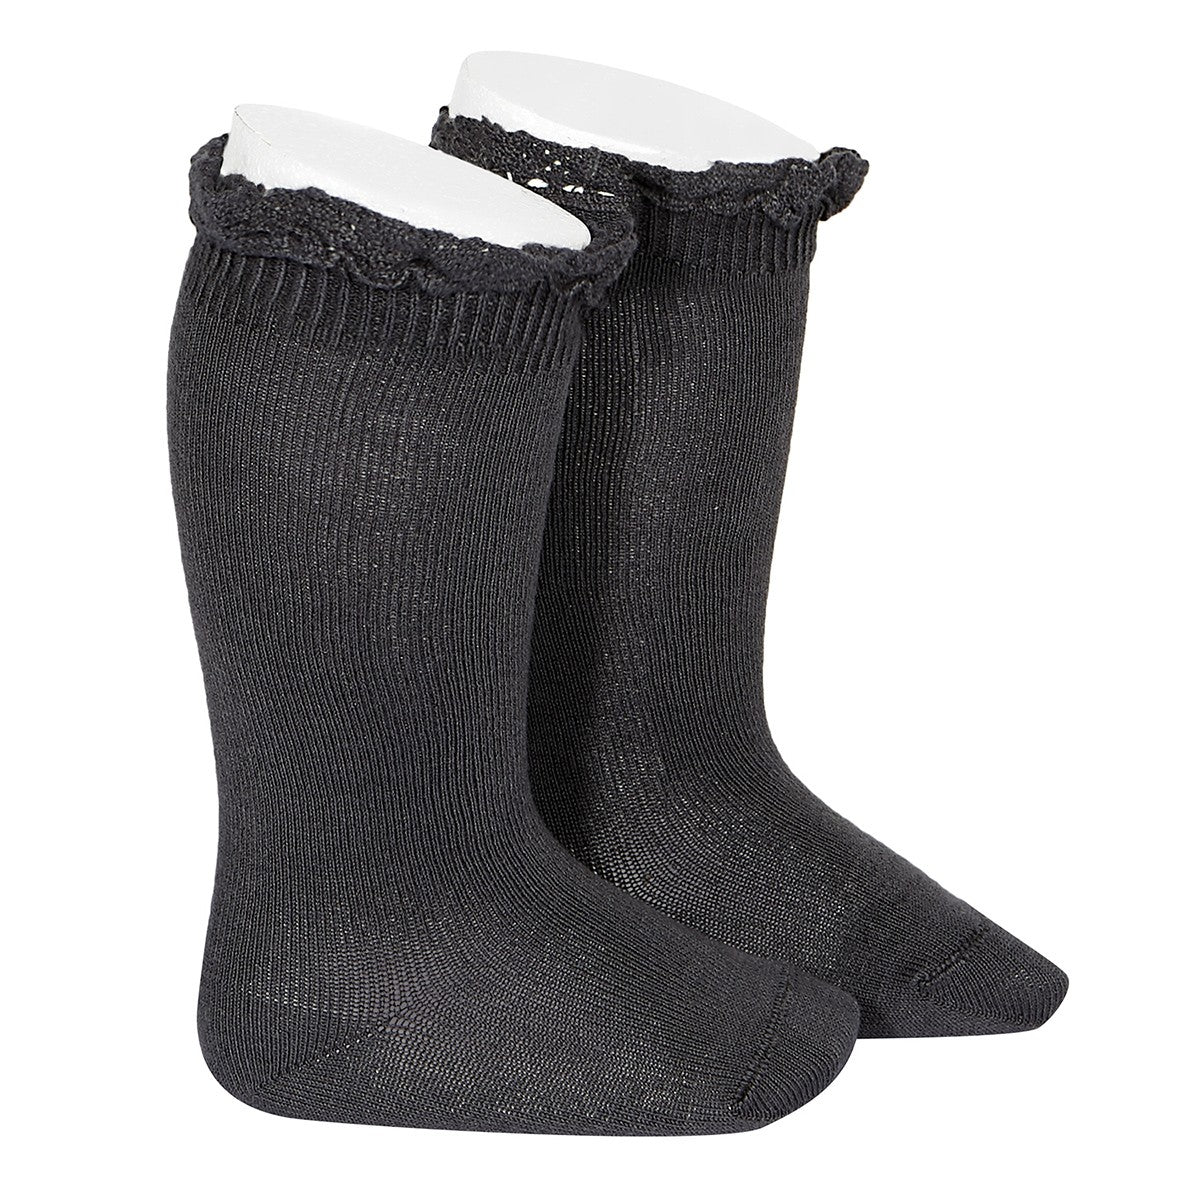 Socks Marino - Knee socks with lace edging cuff -24092-480